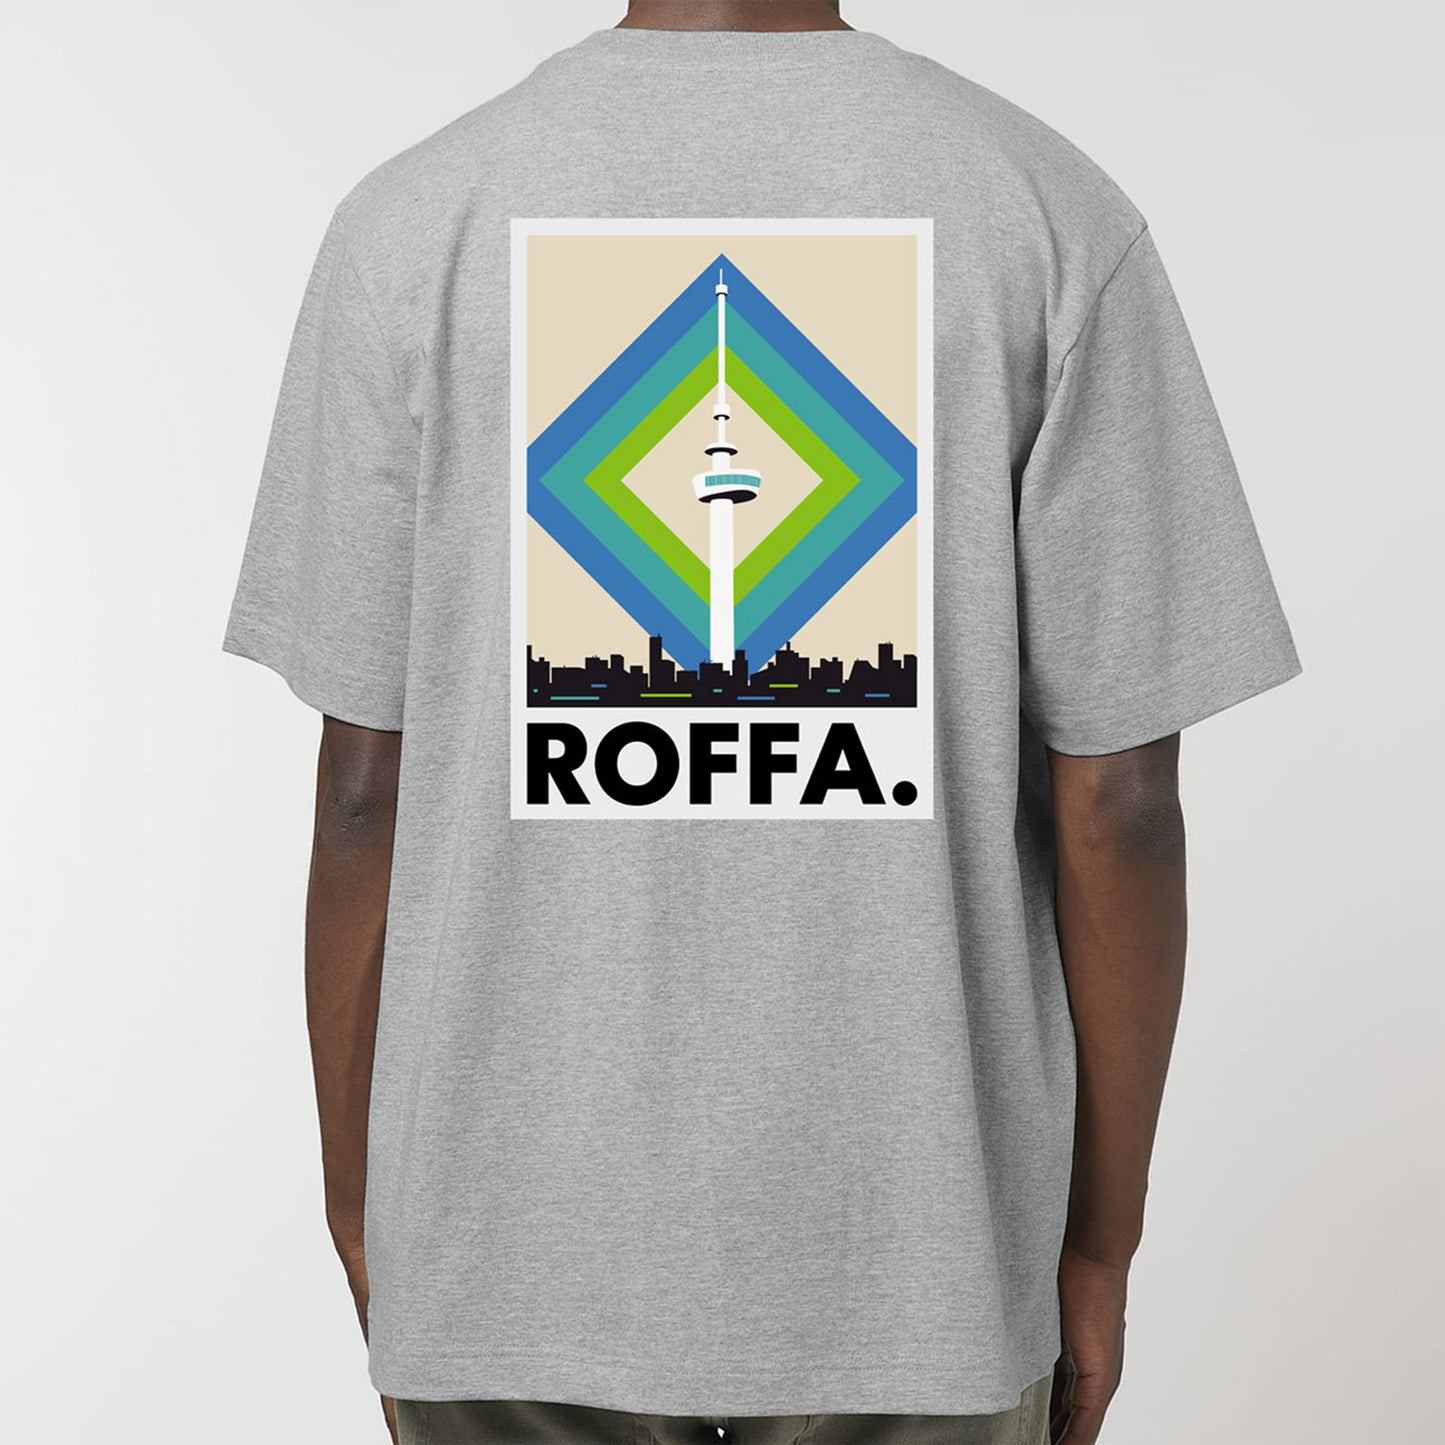 Grijs heavy t-shirt met Roffa en Euromast logo